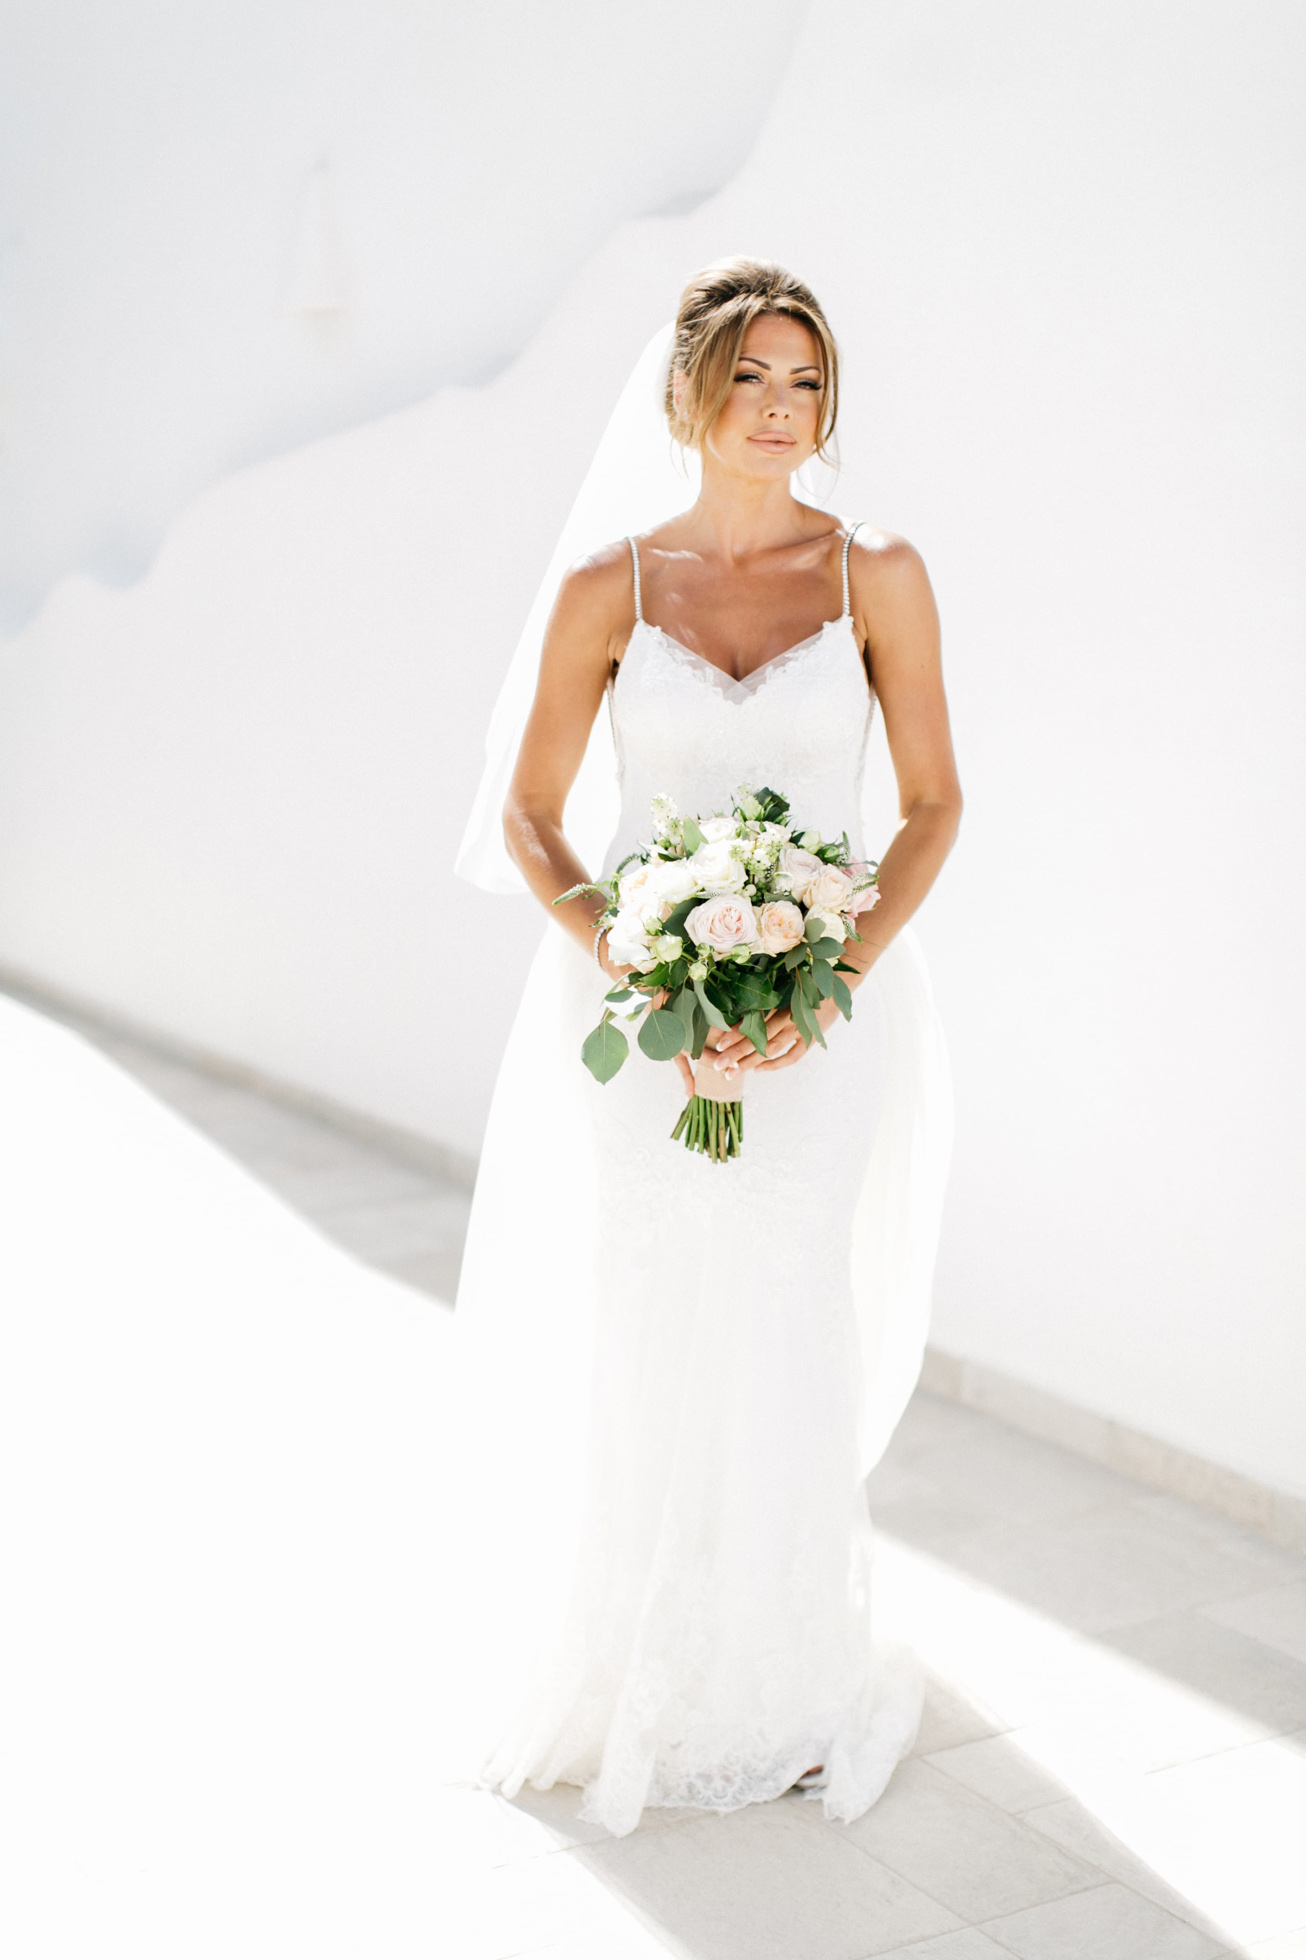 Bride's portrait before wedding ceremony in Santorini island, Greece.